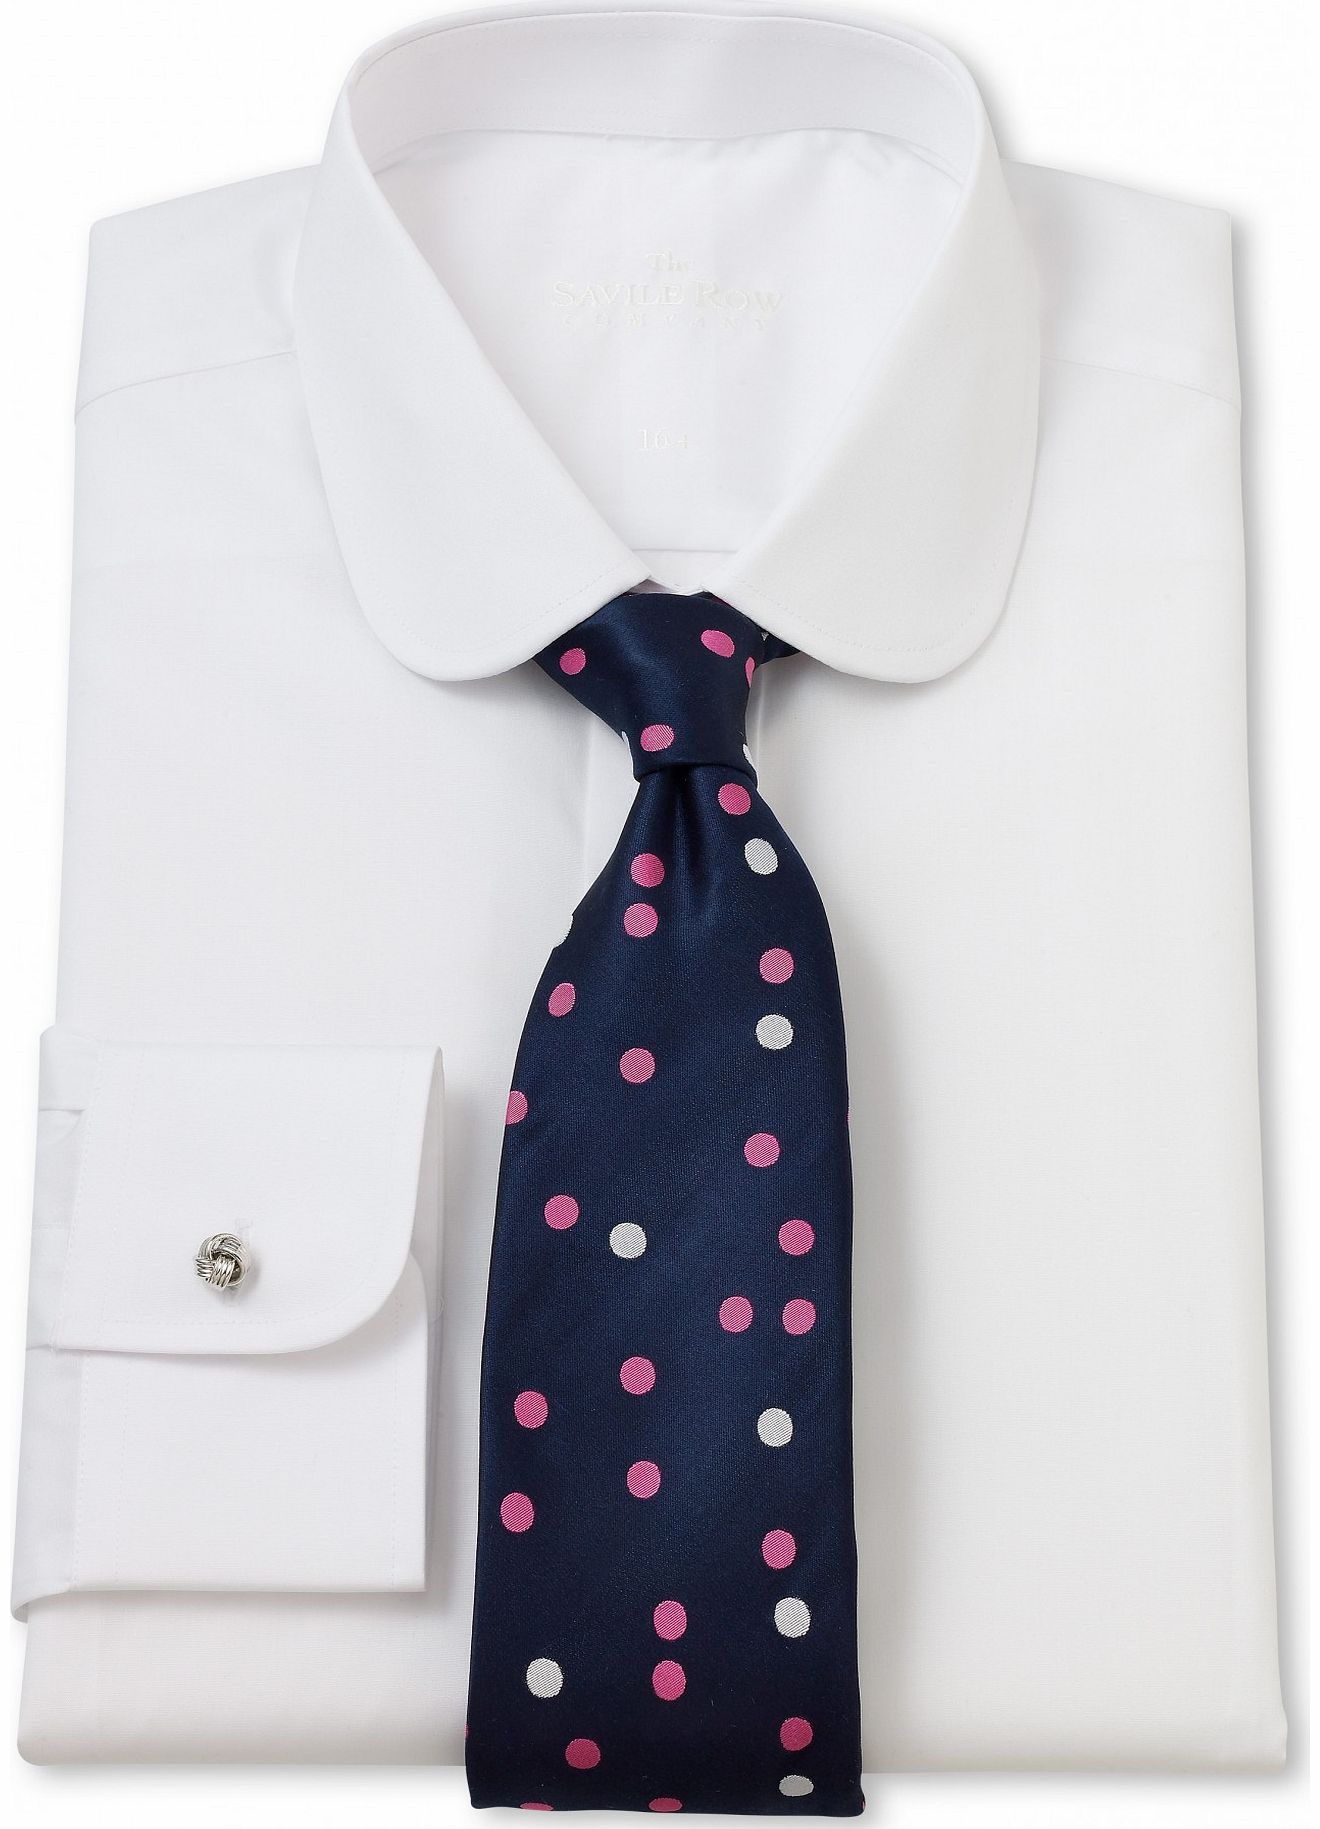 Savile Row Company White Round Collar Slim Fit Shirt 16`` Standard